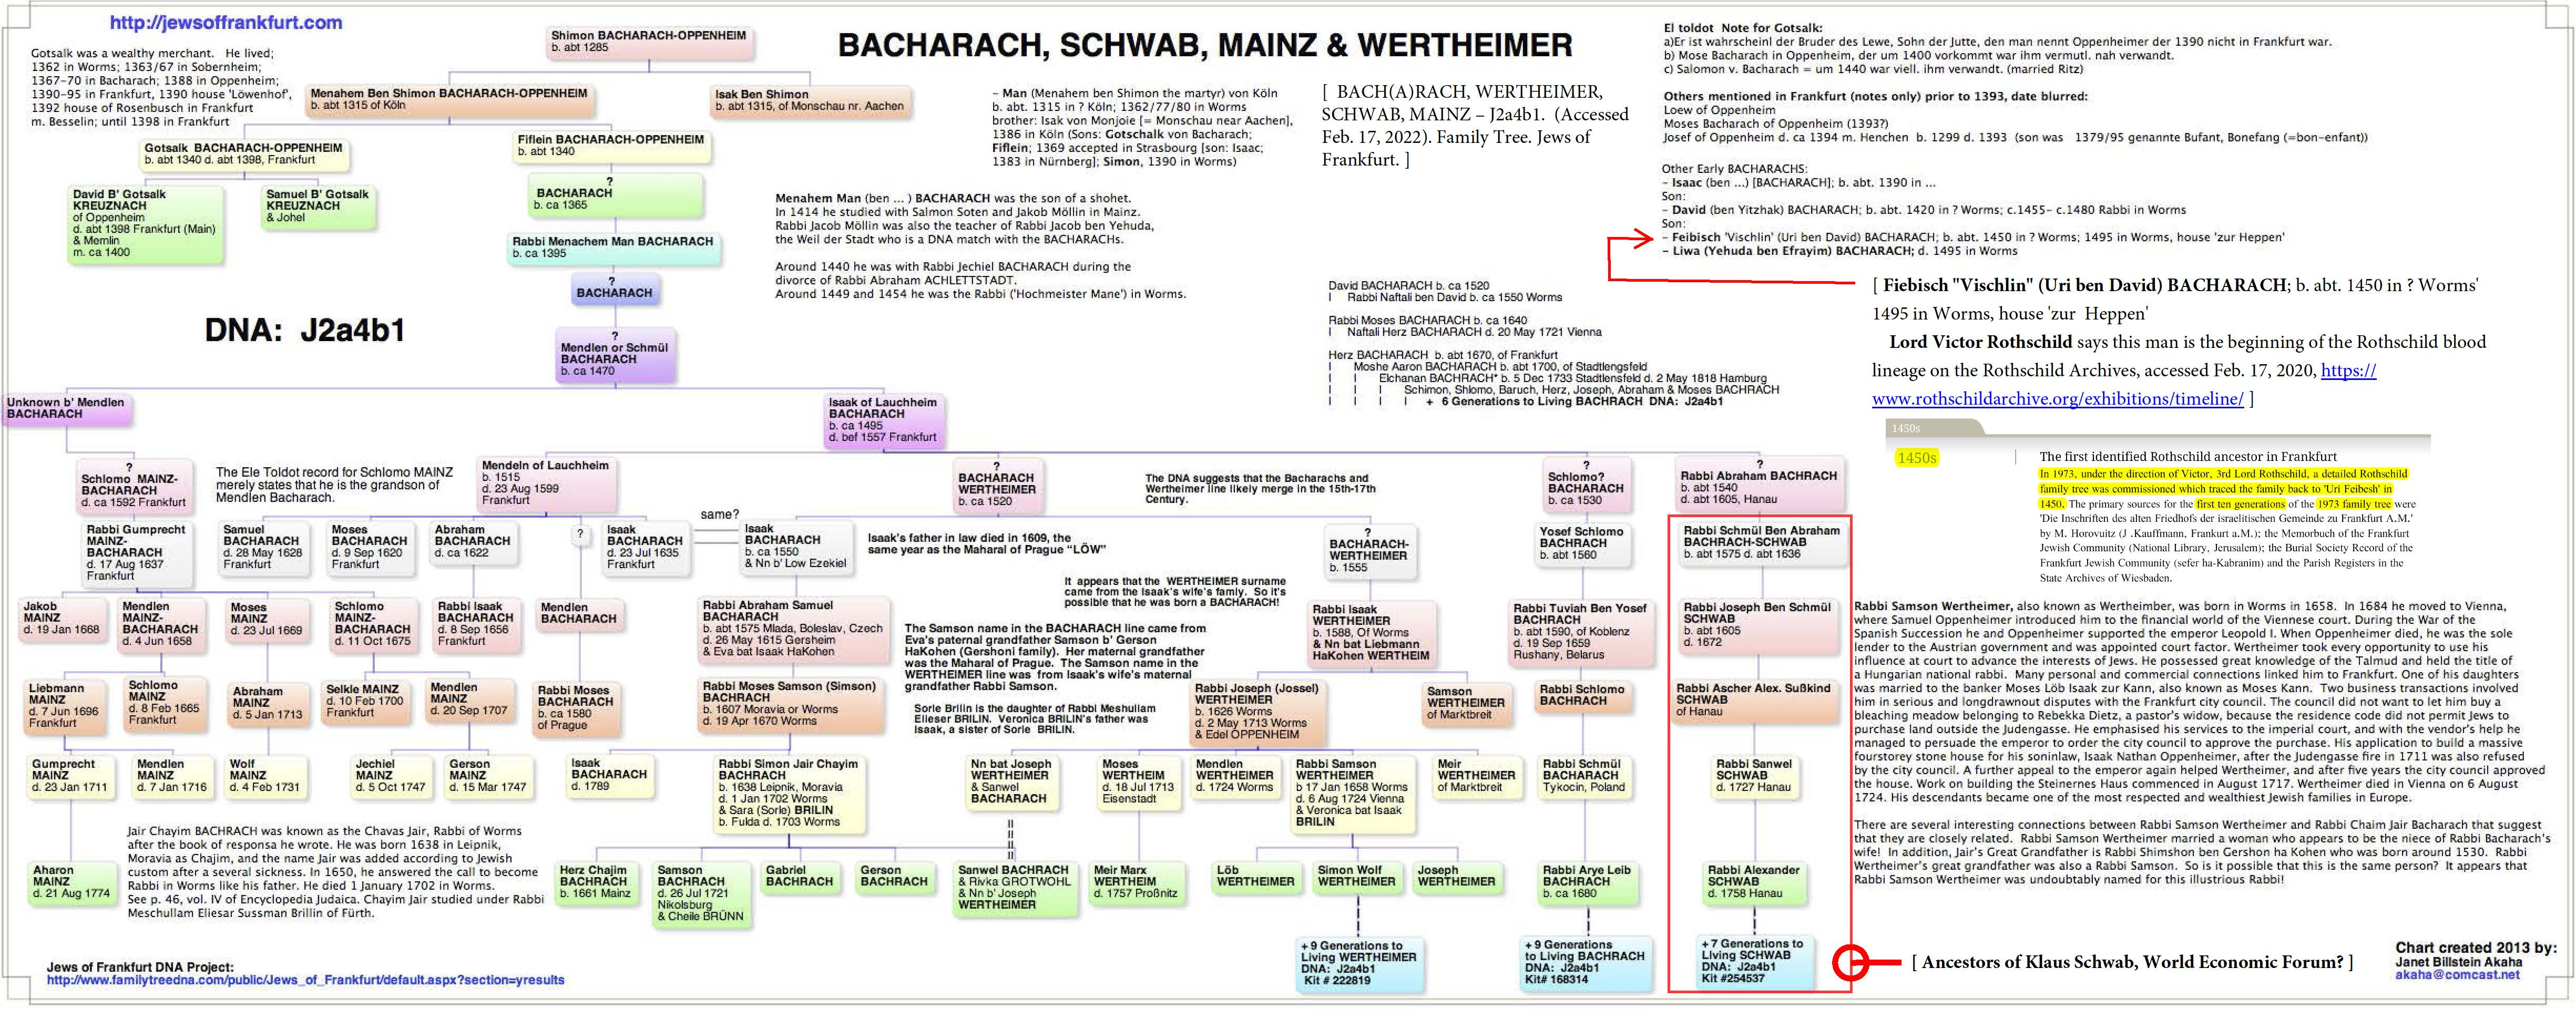 BACH(A)RACH, WERTHEIMER, SCHWAB, MAINZ – J2a4b1. (Accessed Feb. 17, 2022). Family Tree. Jews of Frankfurt.